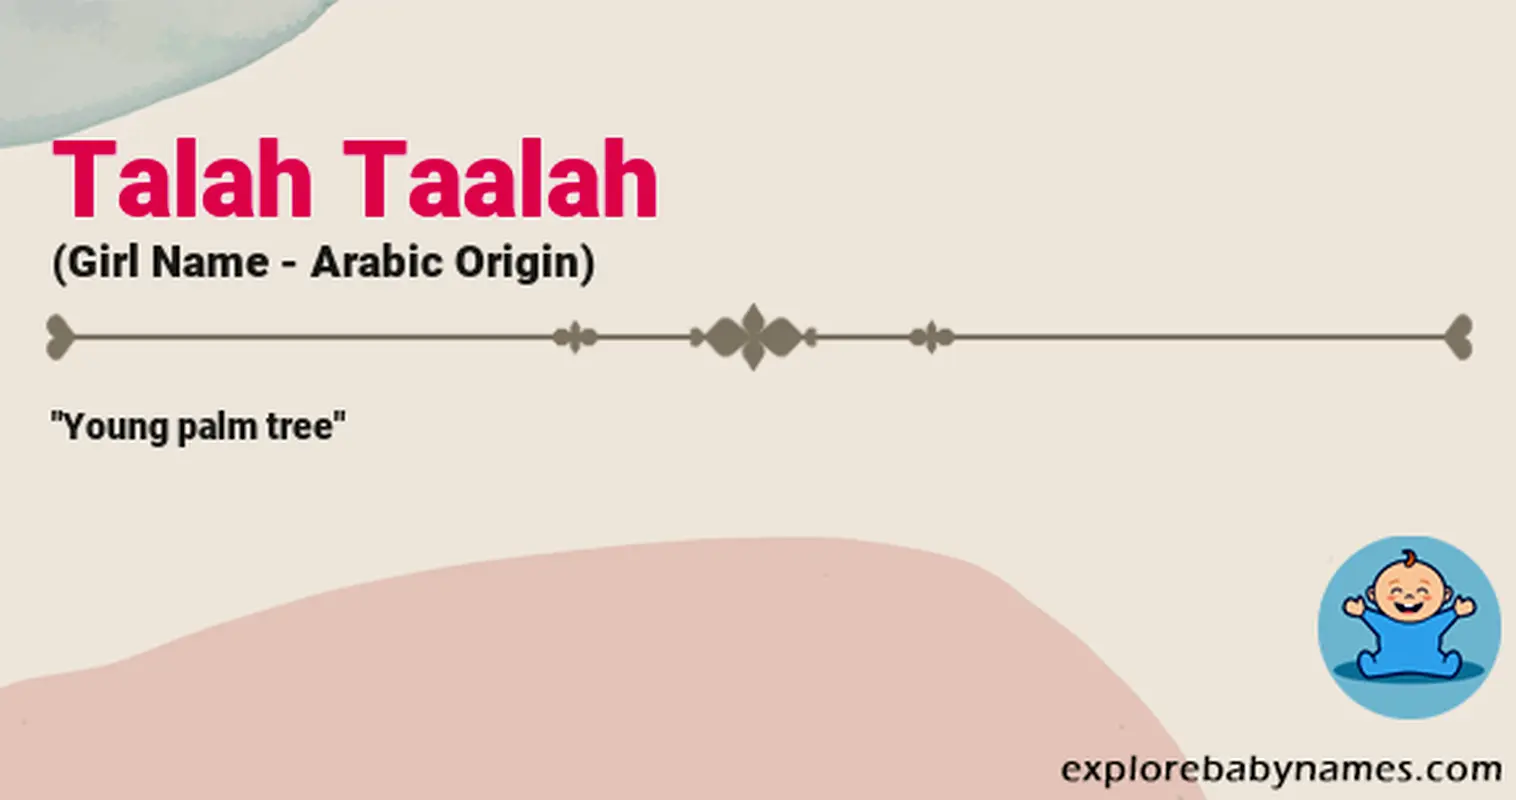 Meaning of Talah Taalah